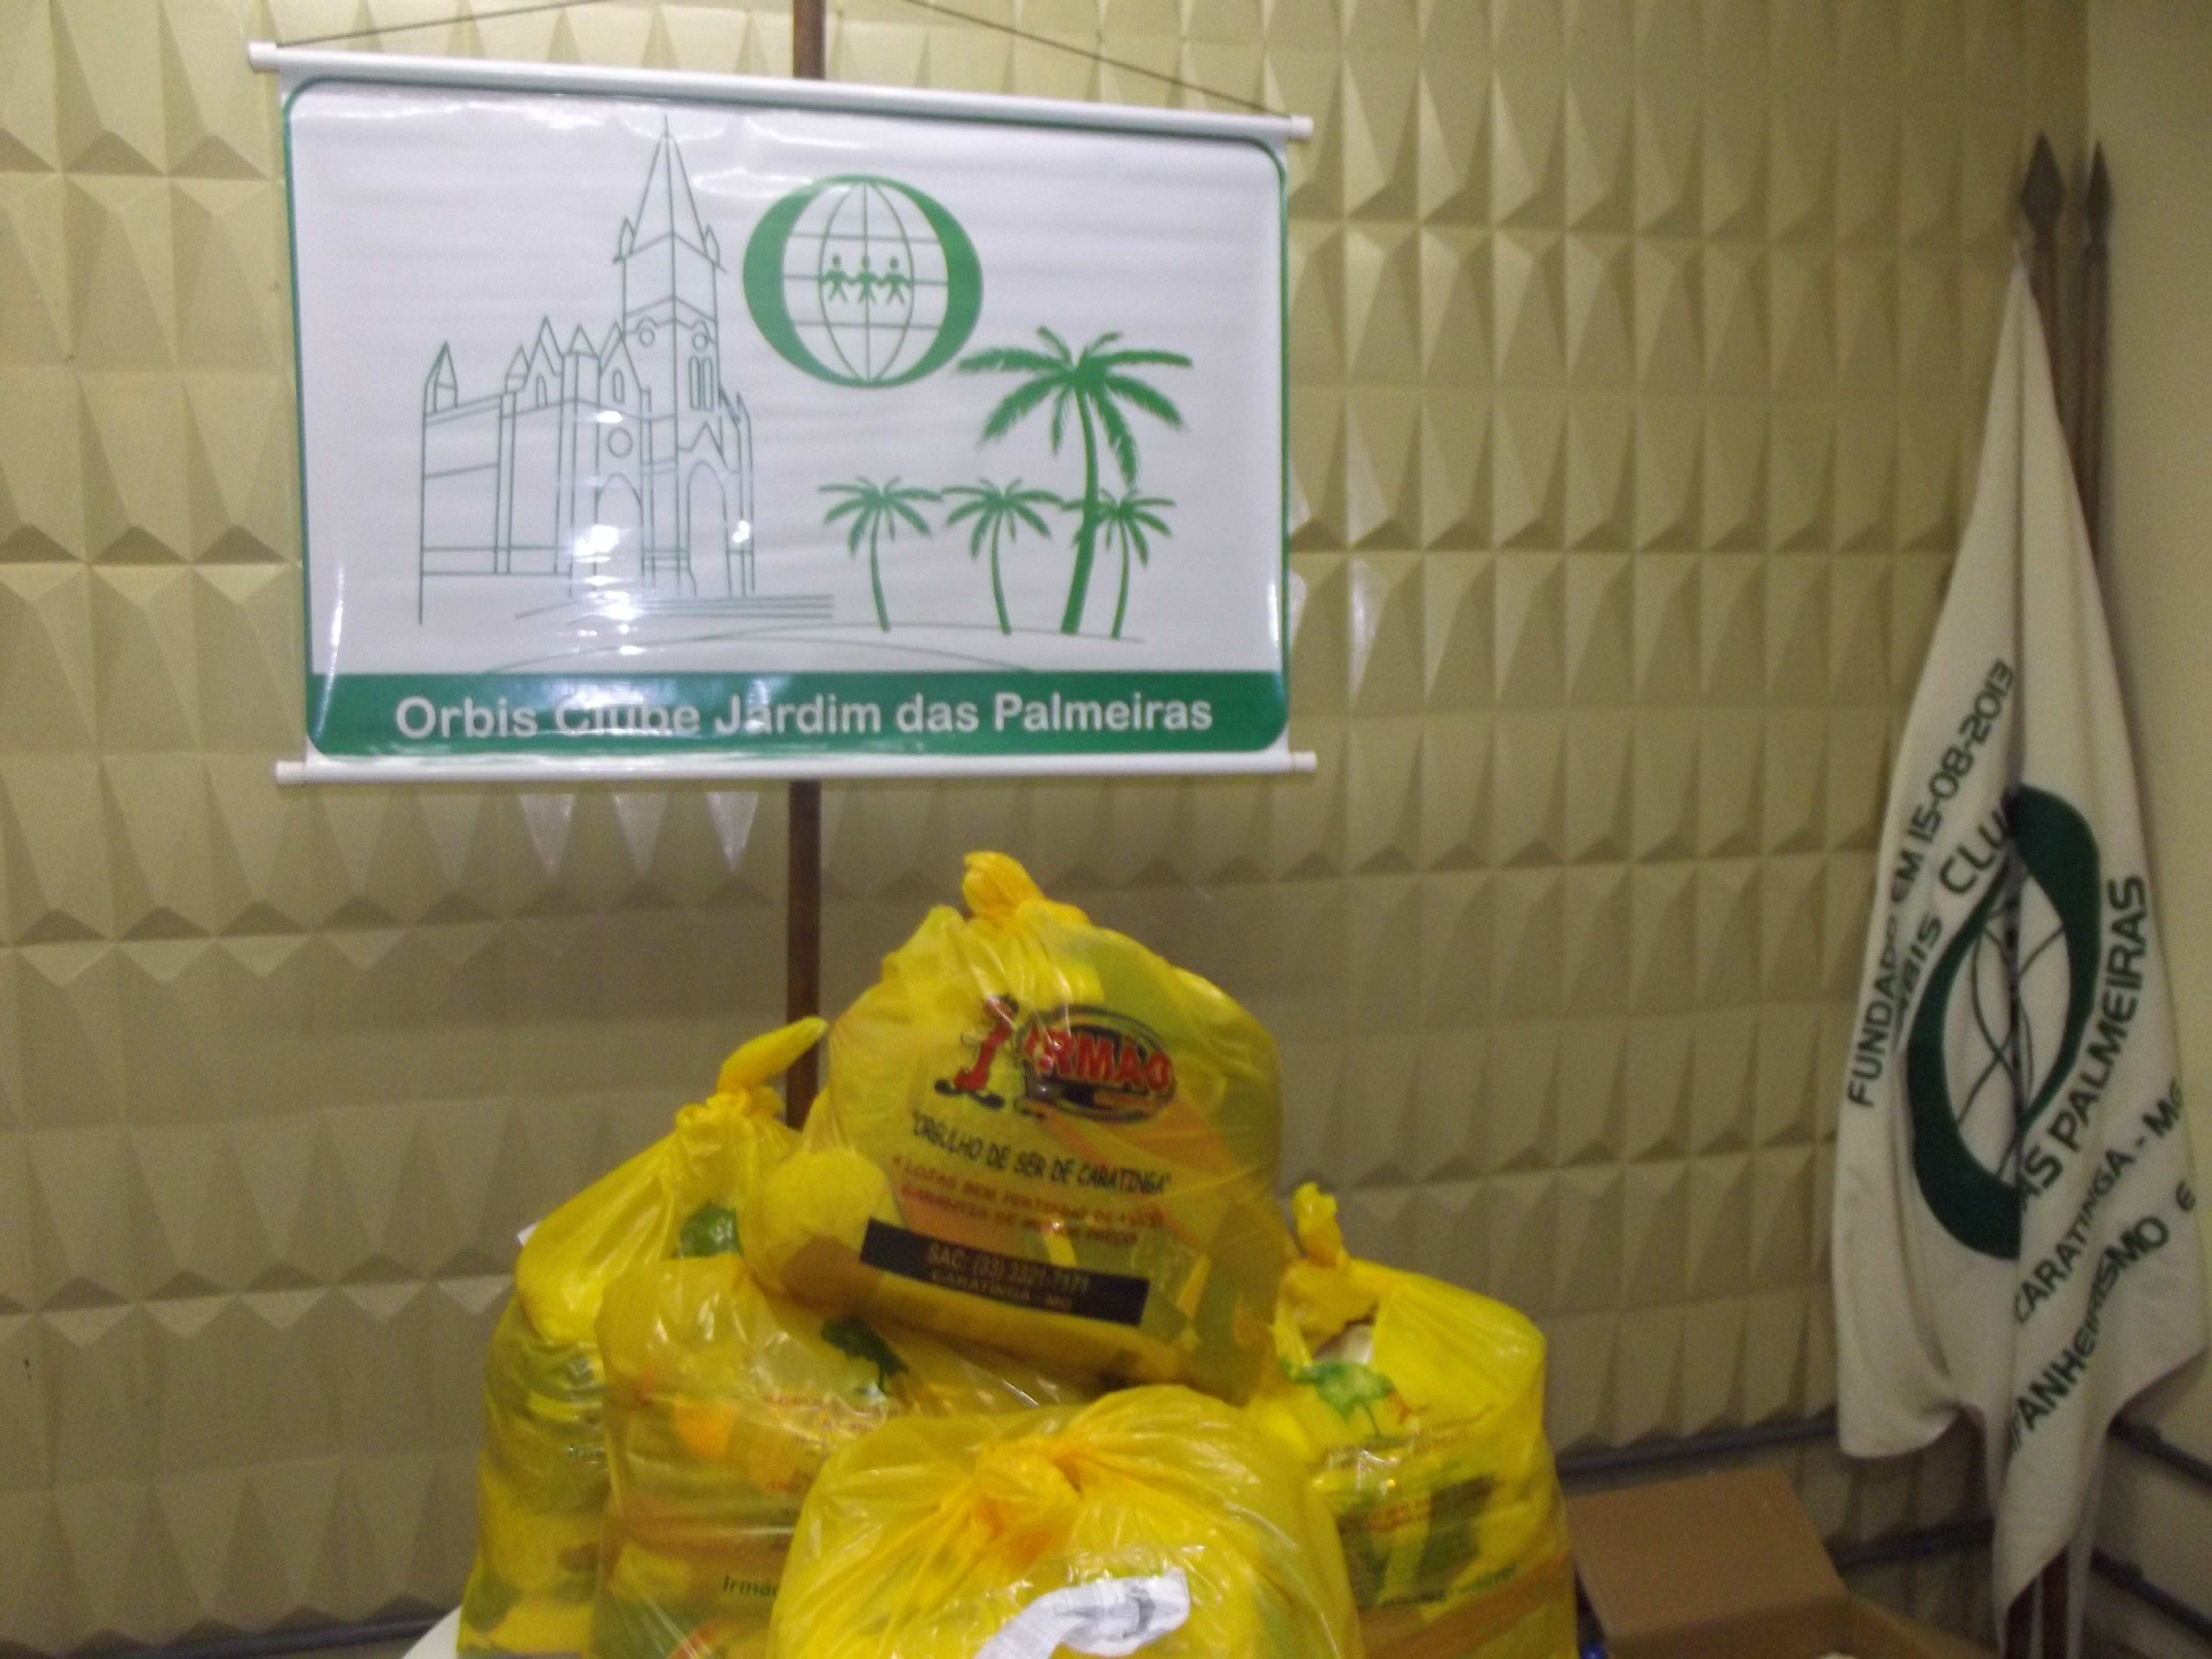 Orbis Clube Jardim das Palmeiras entrega cestas básicas para a ASDOERC